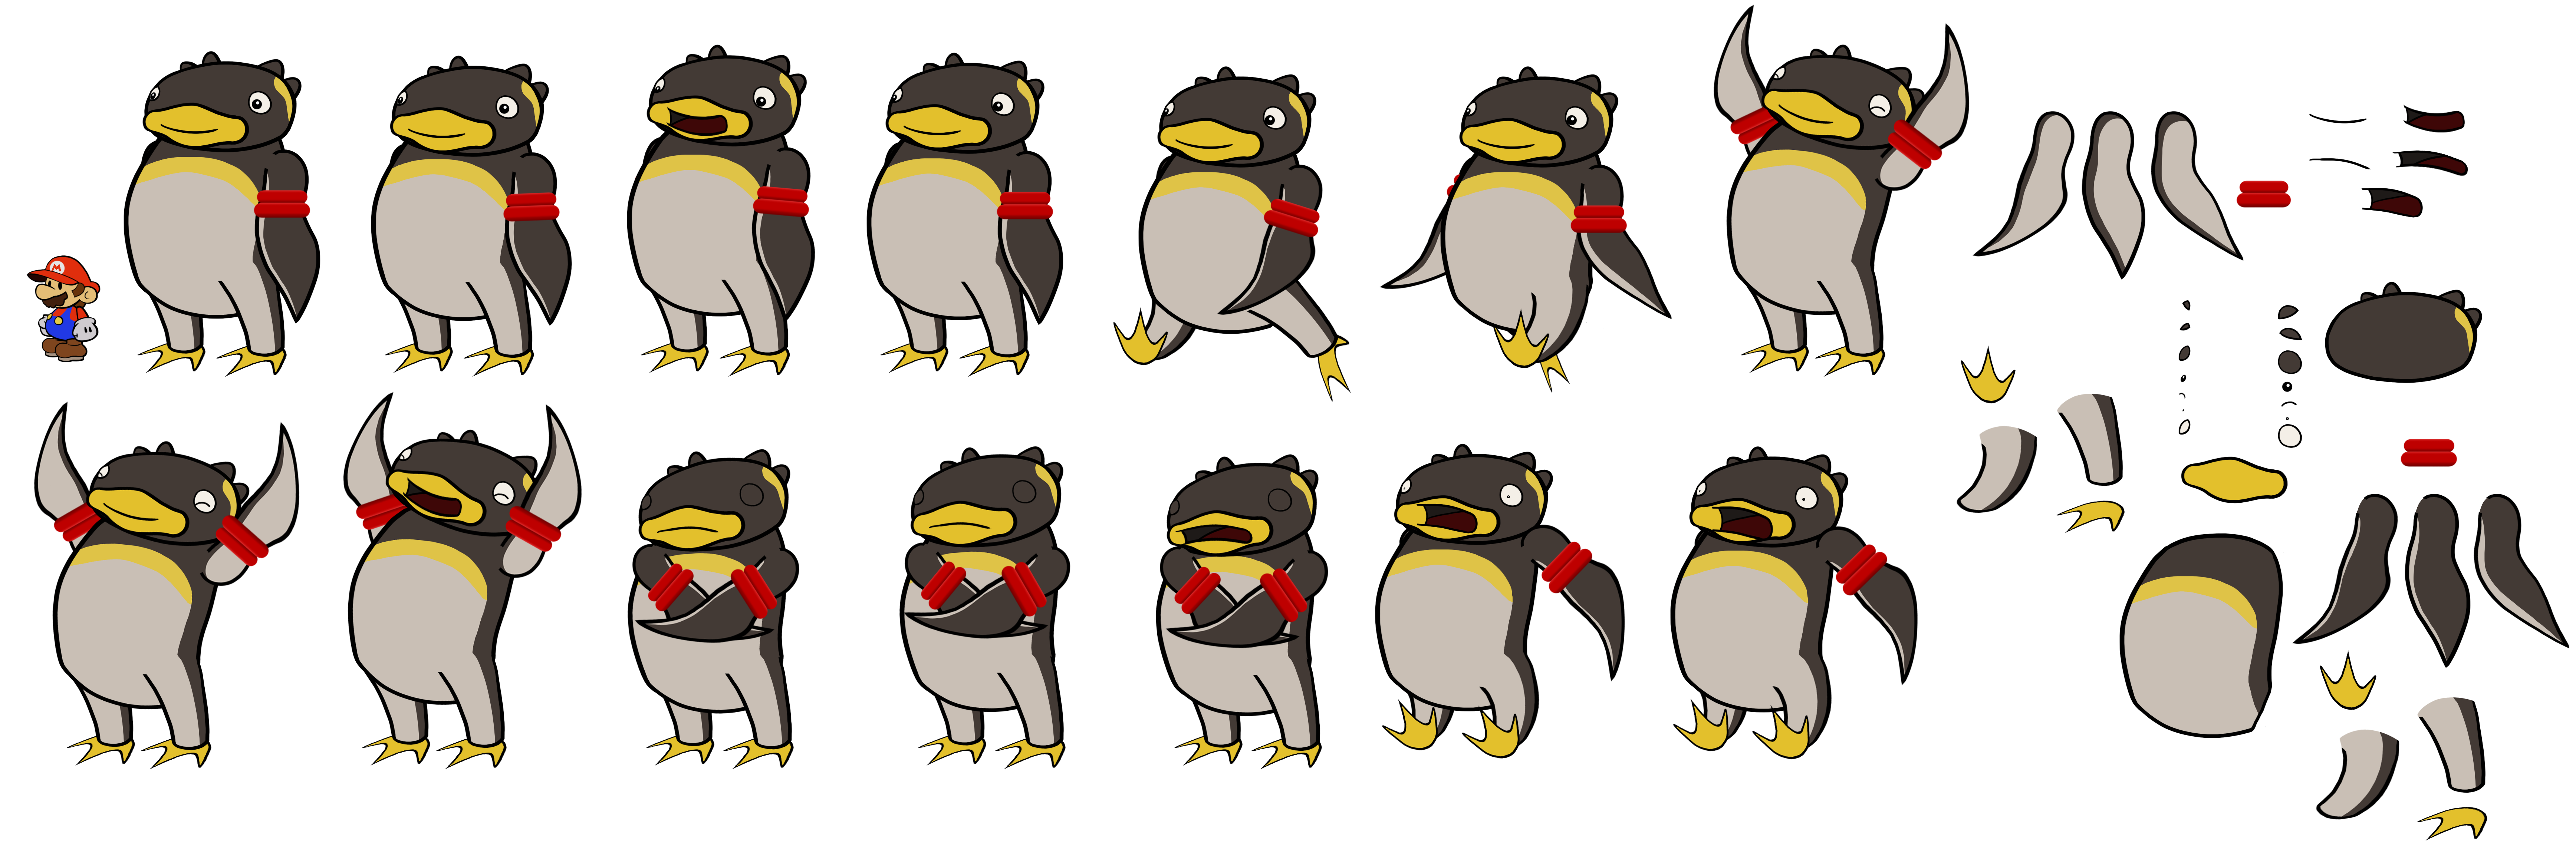 Coach Penguin (Paper Mario-Style)